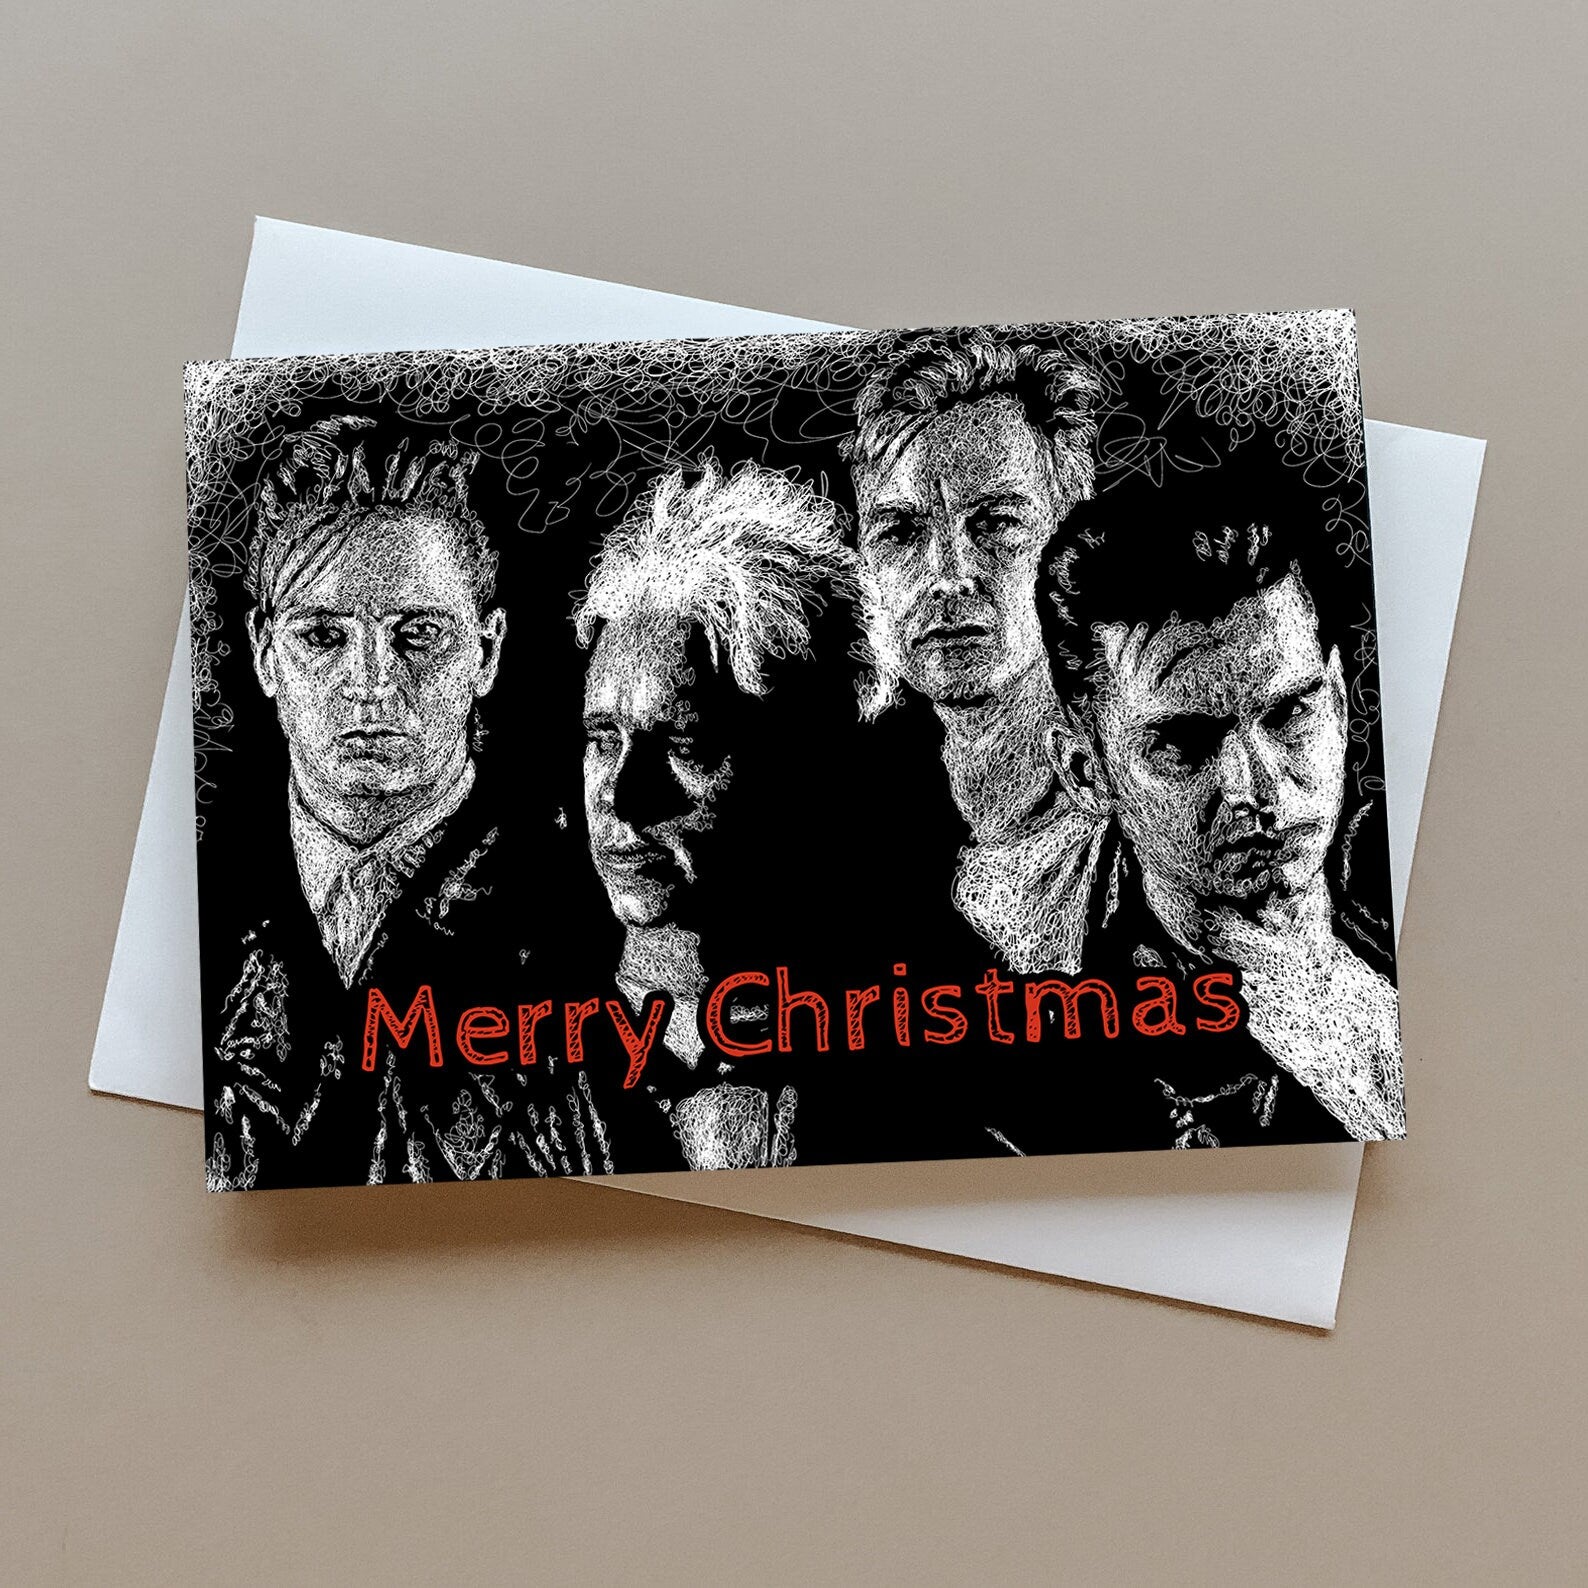 DM inspired Christmas card, gift for DM fan, greeting card for music fans, music Christmas gift,  new wave Christmas card